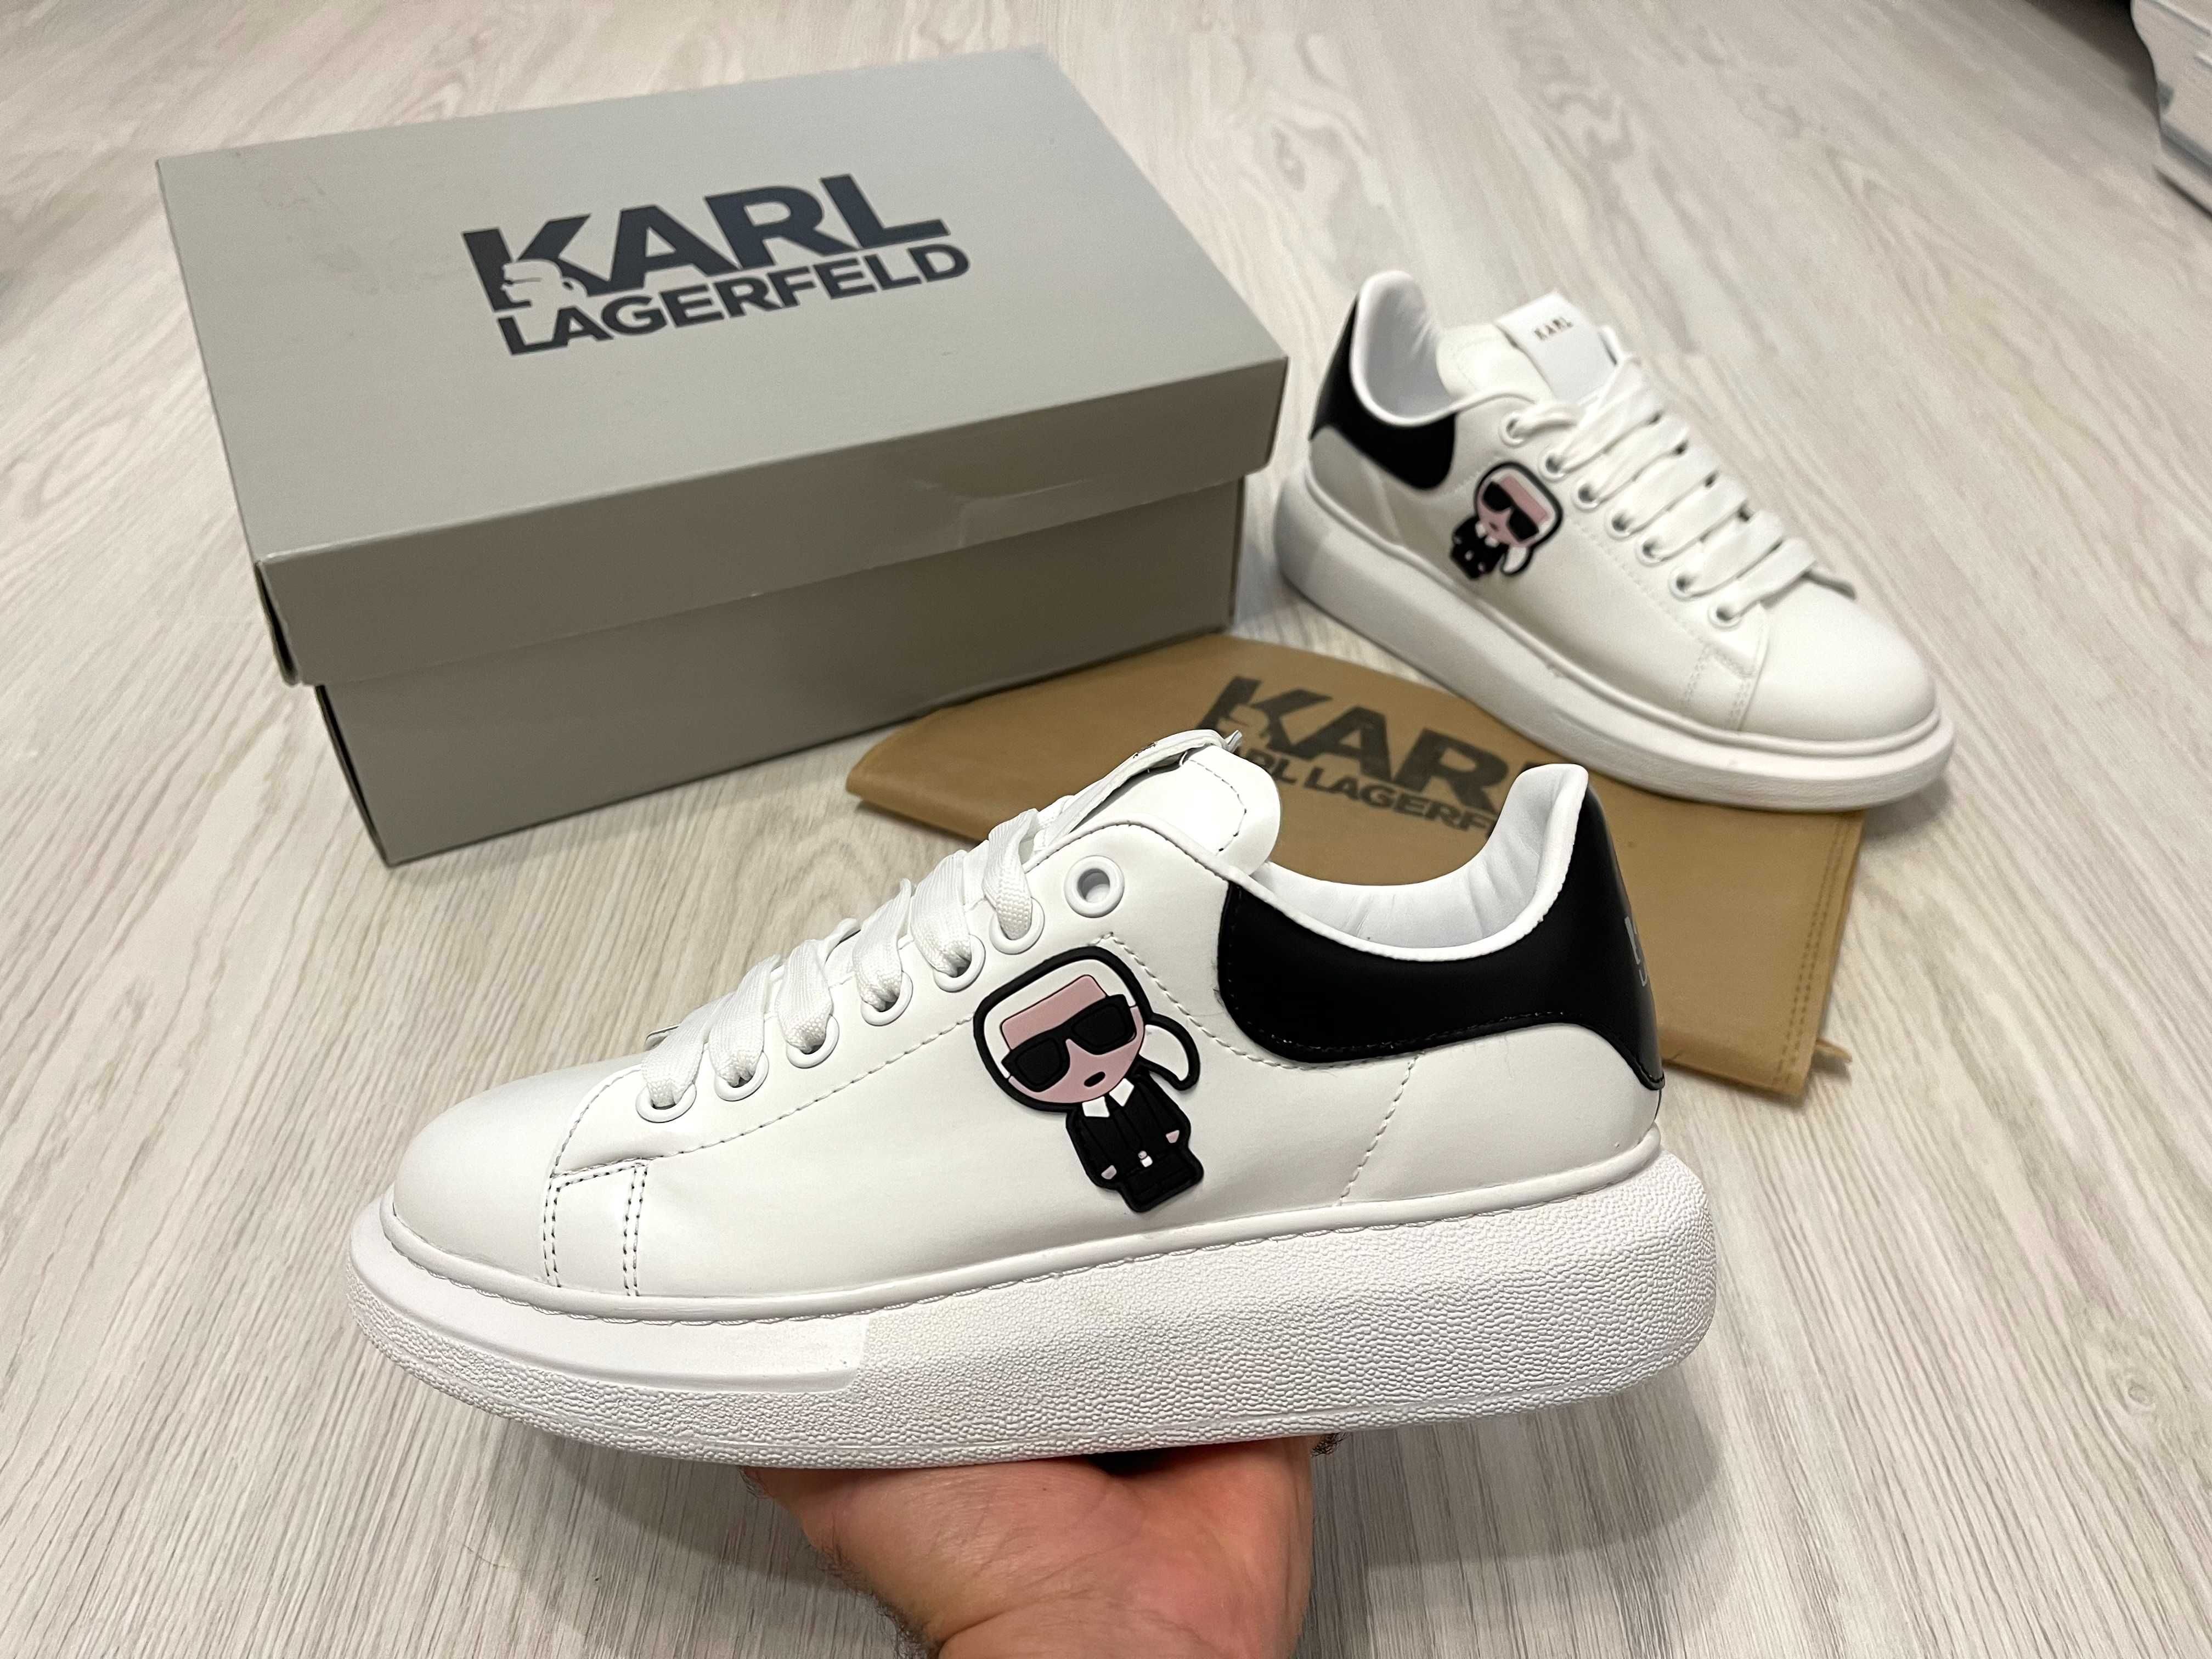 Adidasi Karl Lagerfeld l Produs NOU Tenesi Papuci Fete Baieti Unisex